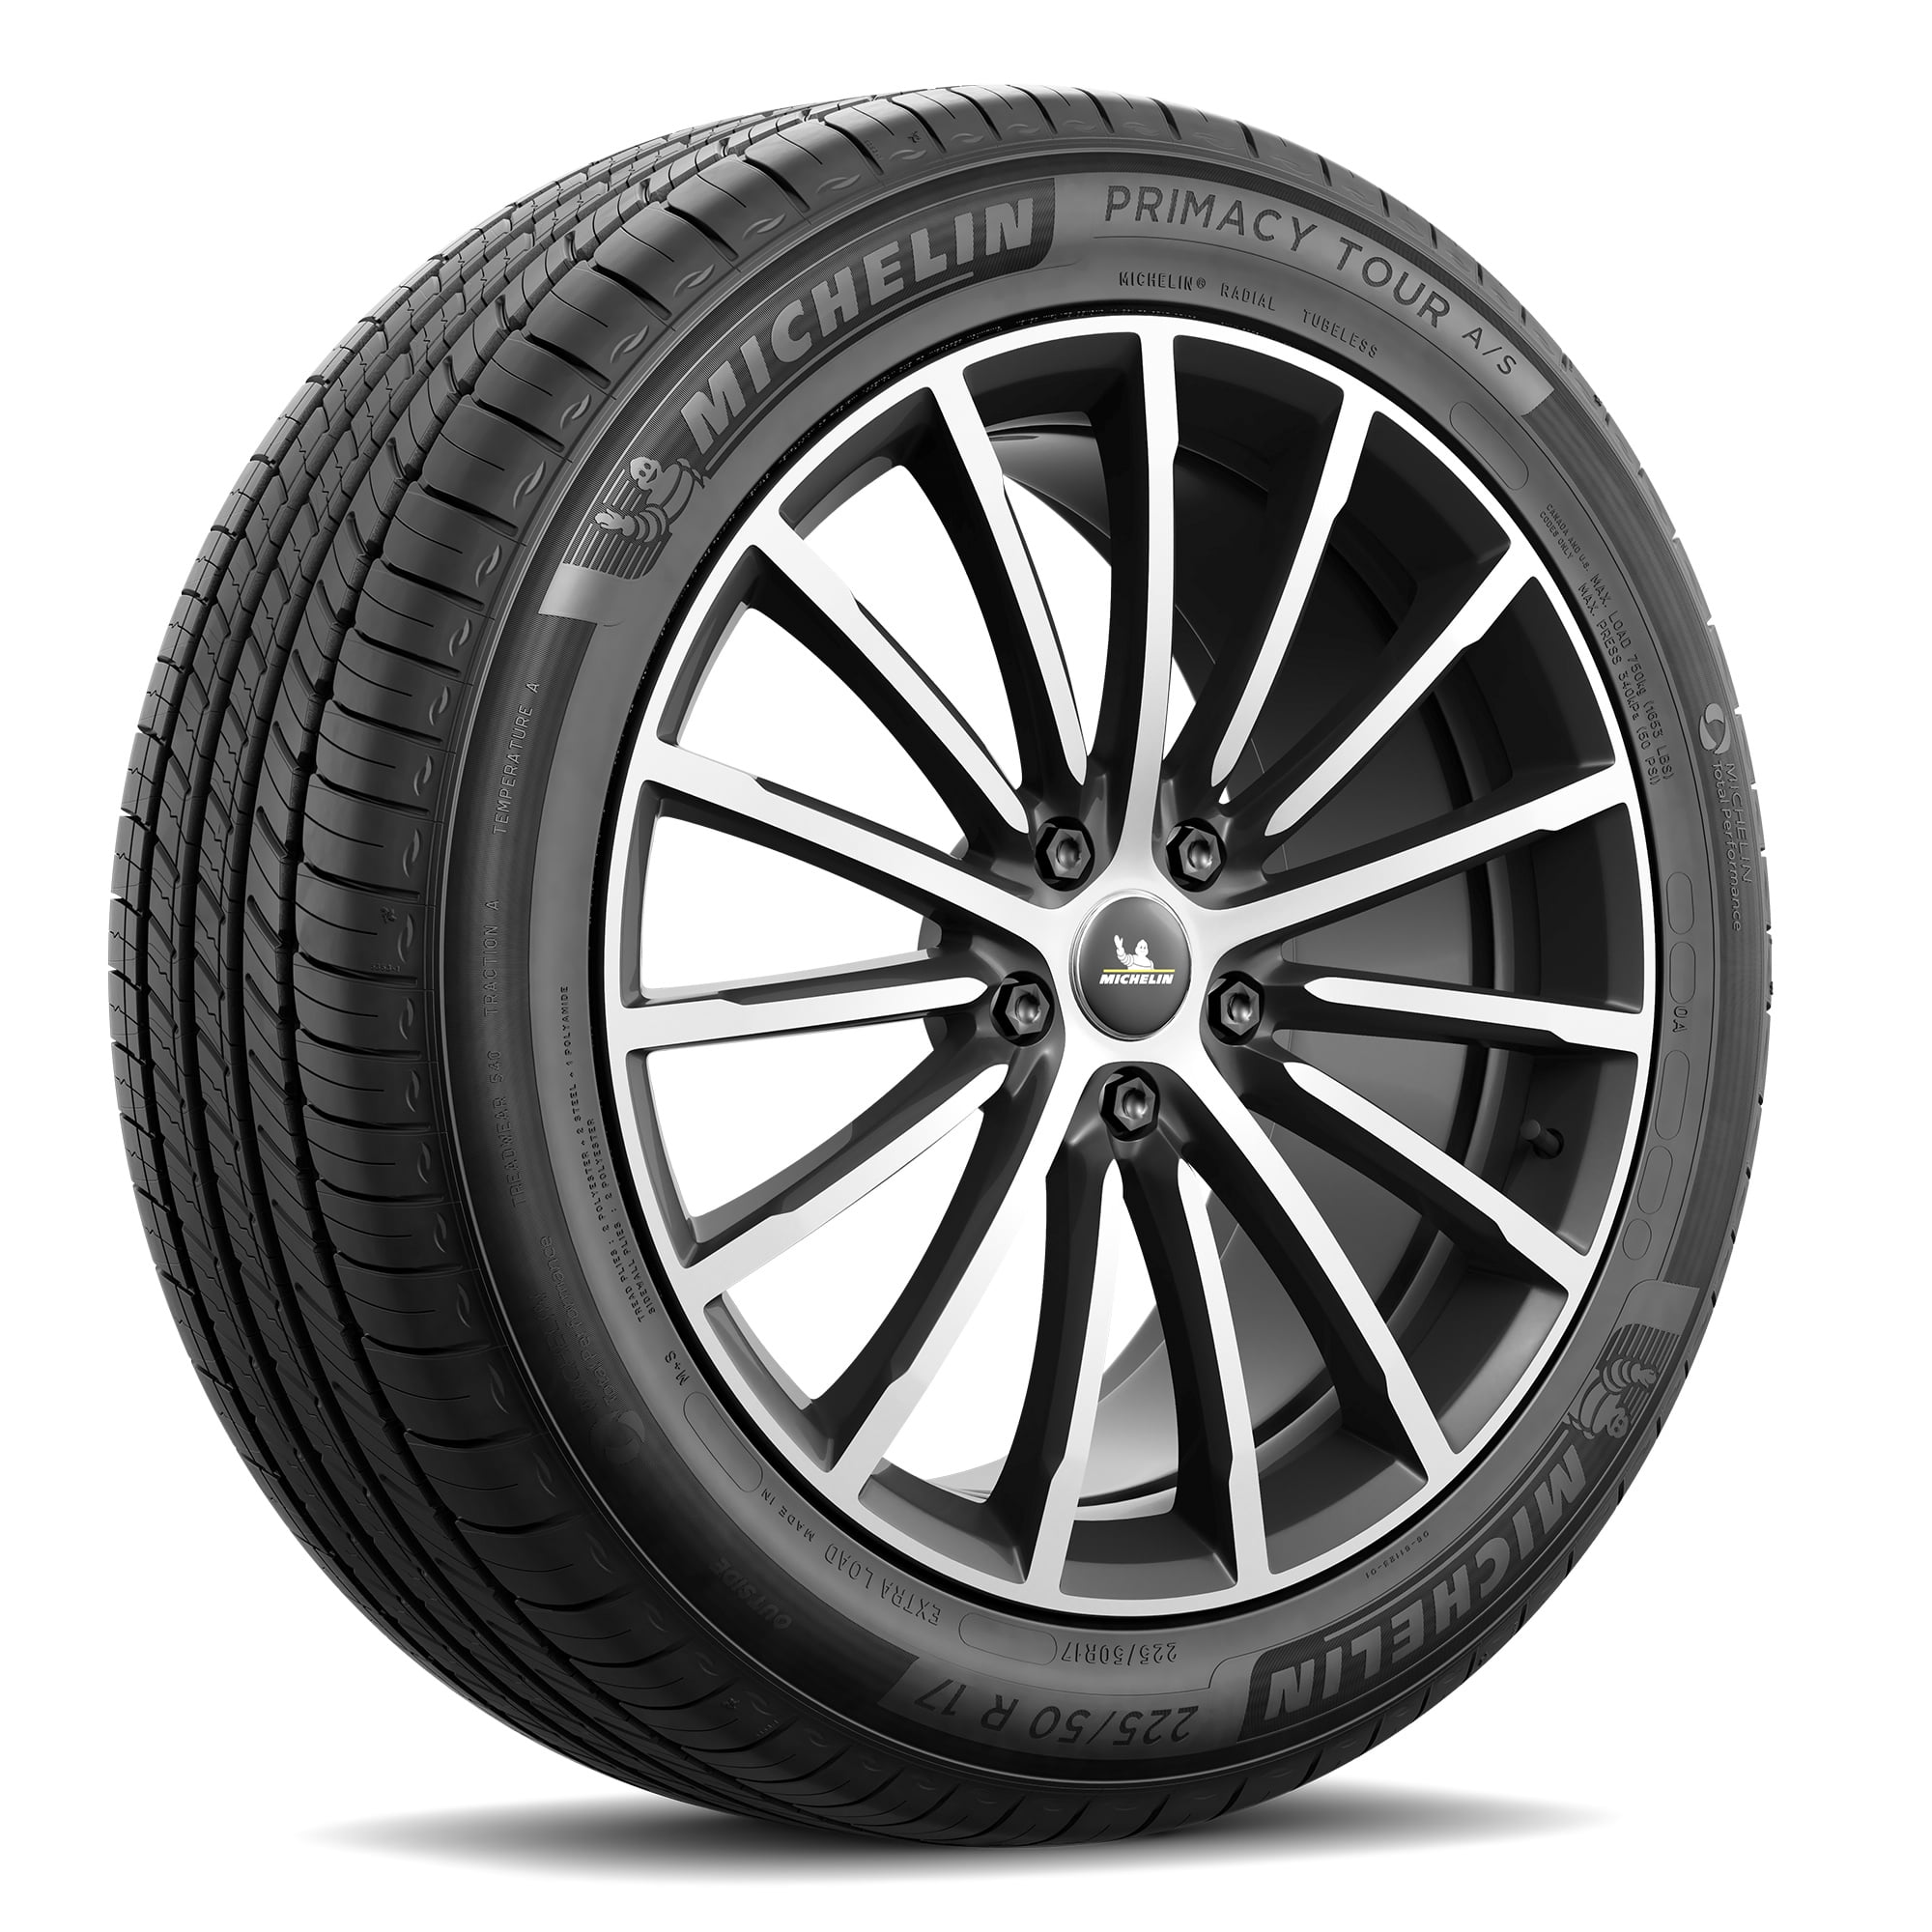 Michelin Primacy Tour A/S All-Season 225/55R18 98V Tire